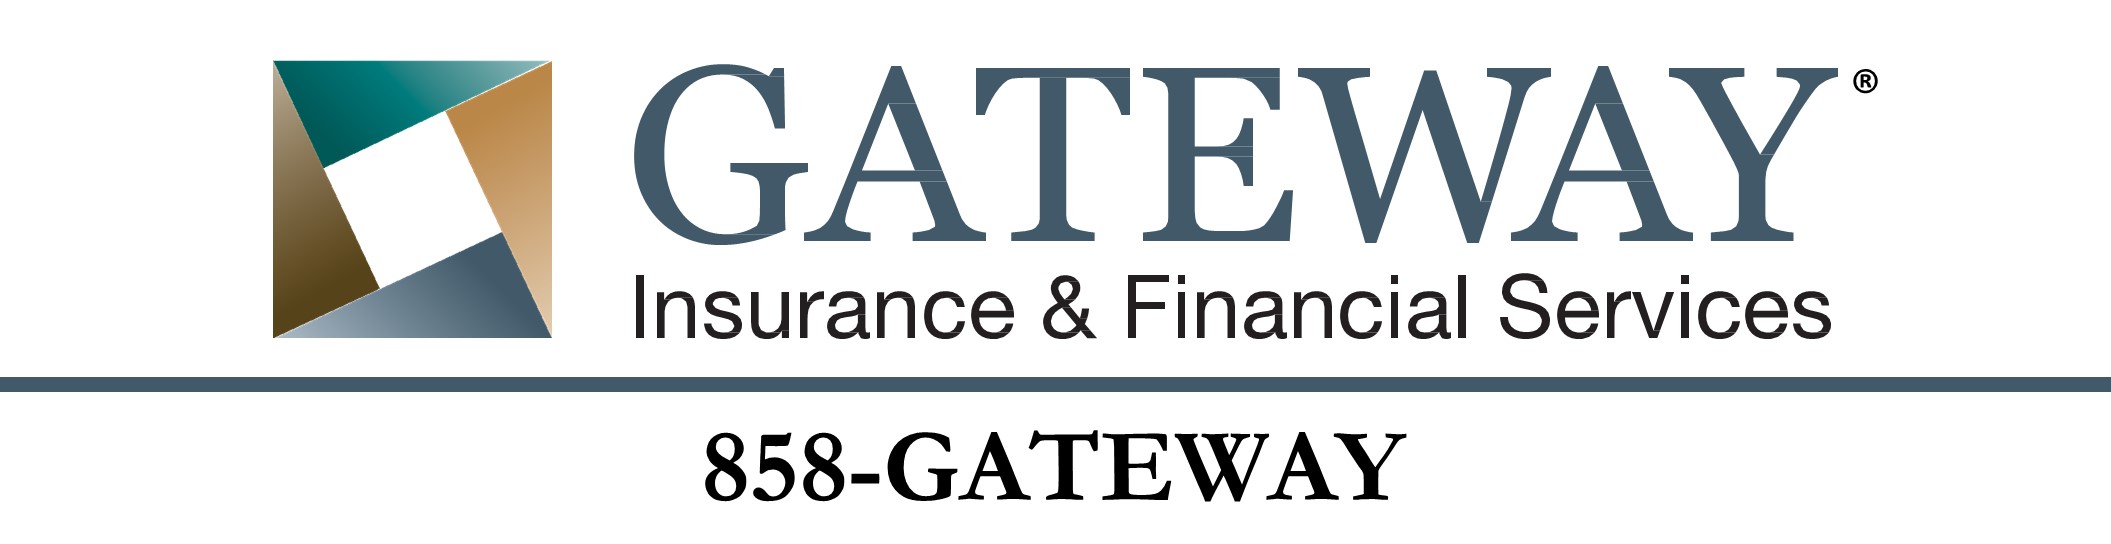 Gateway Insurance & Financial Services